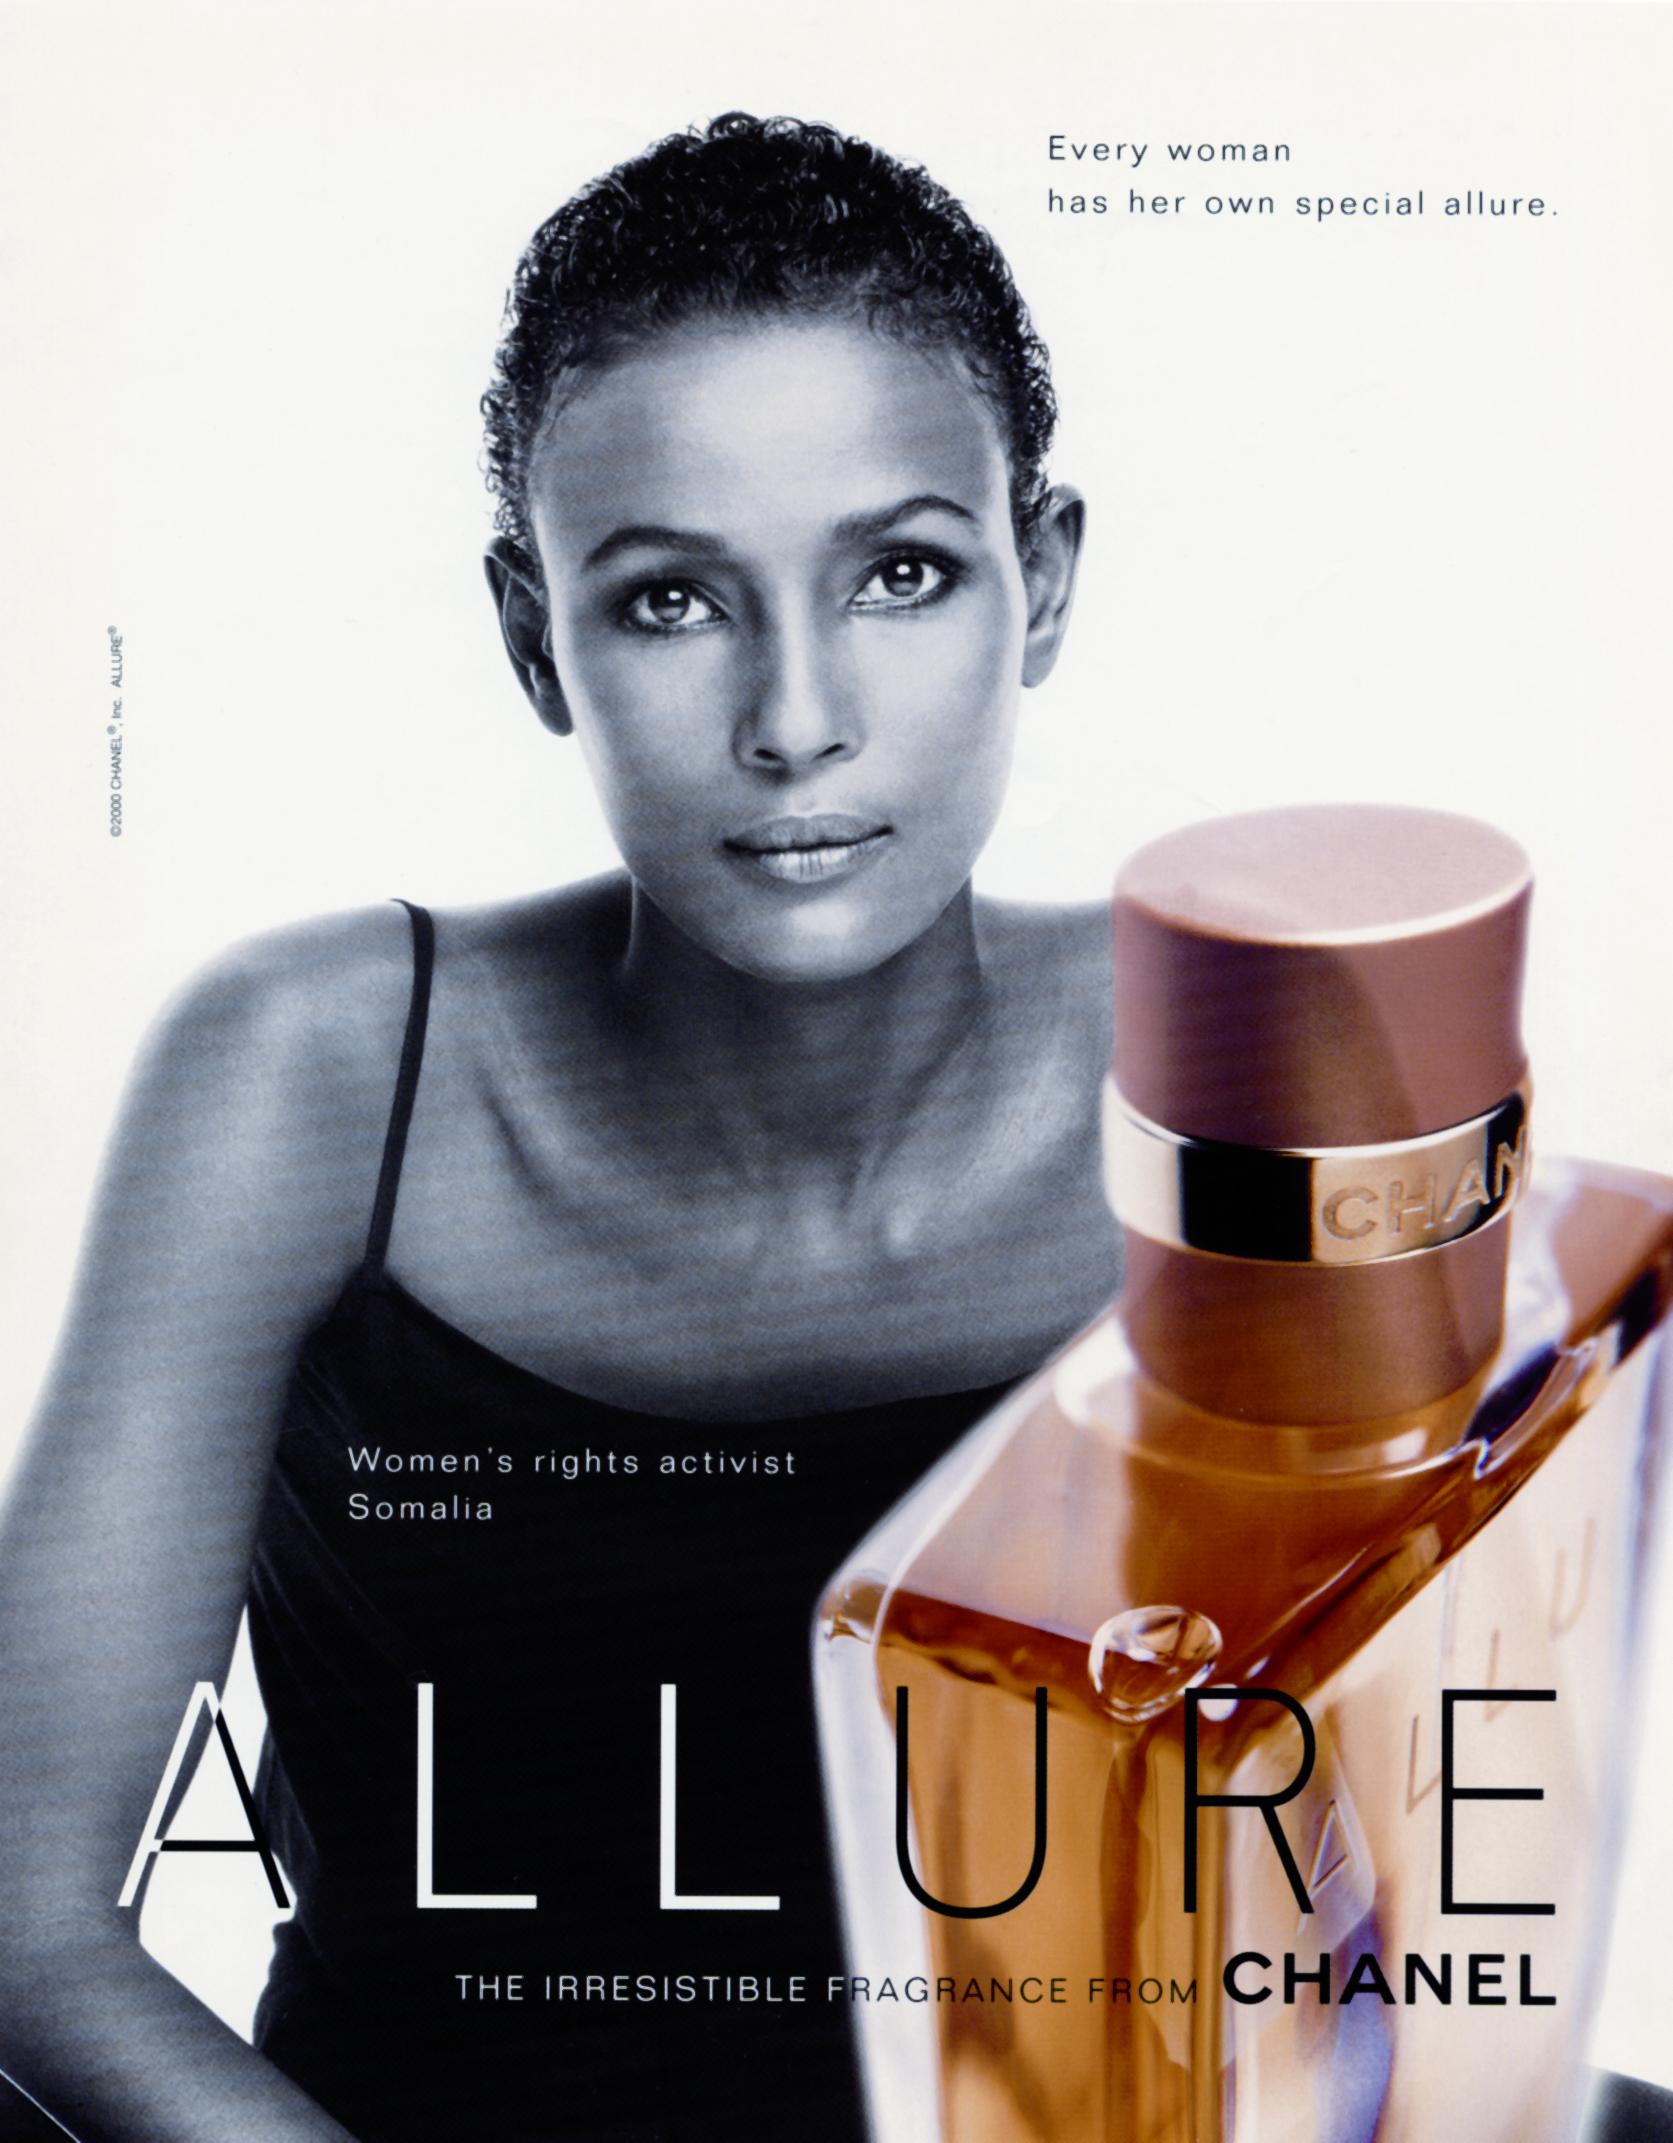 Allure Campaign the 1990s | Desert Flower - The Blog